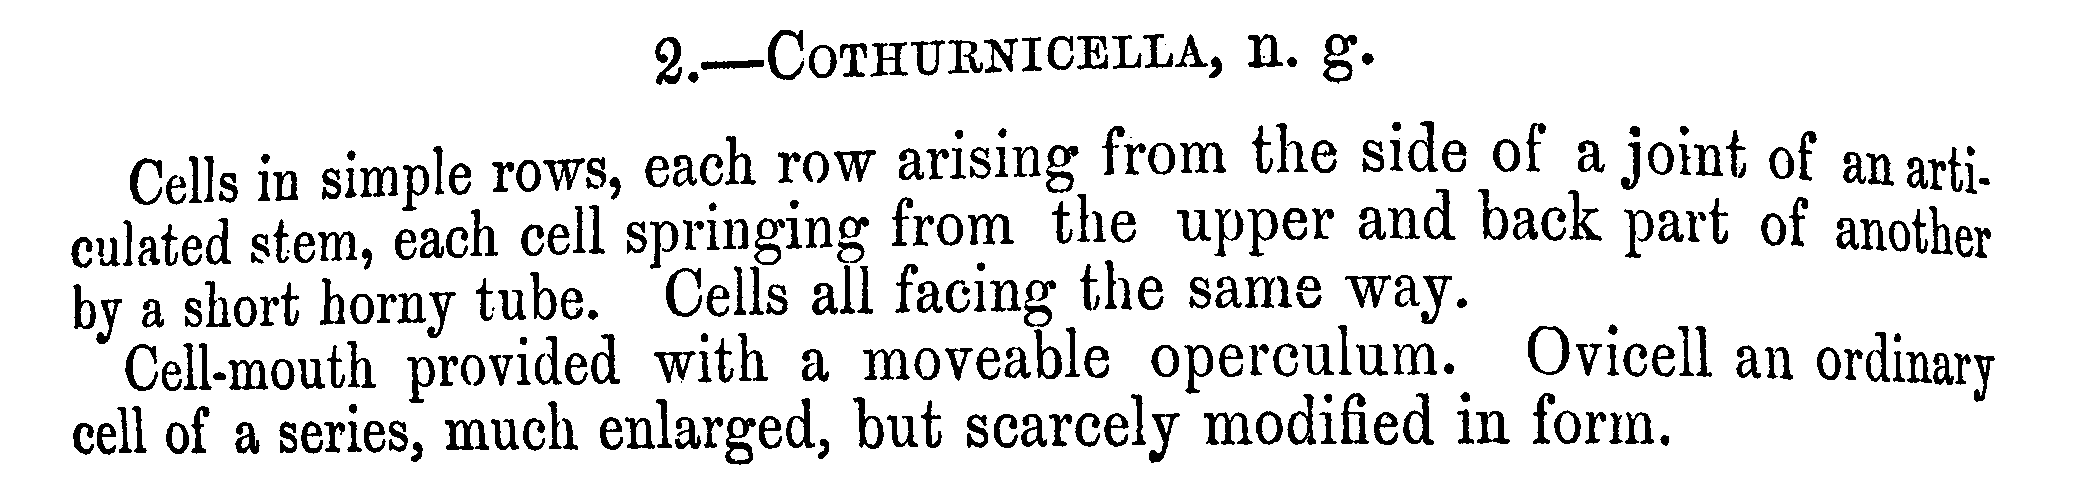 Cothurnicella genus definition